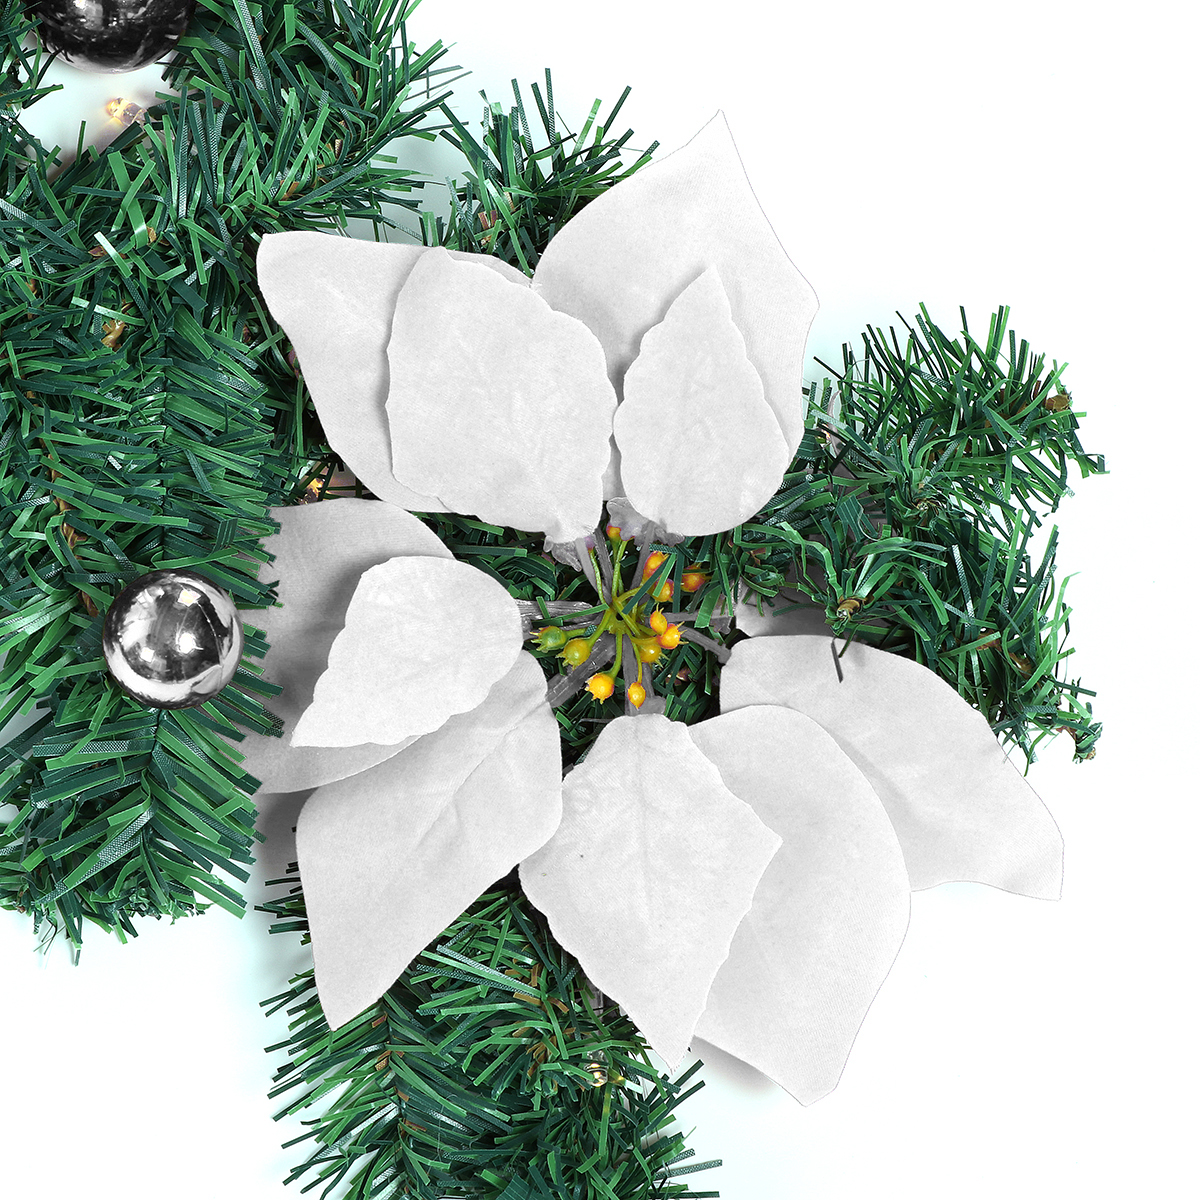 27m-Christmas-Tree-Wreath-Door-Hanging-Garland-Window-Ornament-Xmas-Party-Decor-Christmas-Decoration-1771839-14